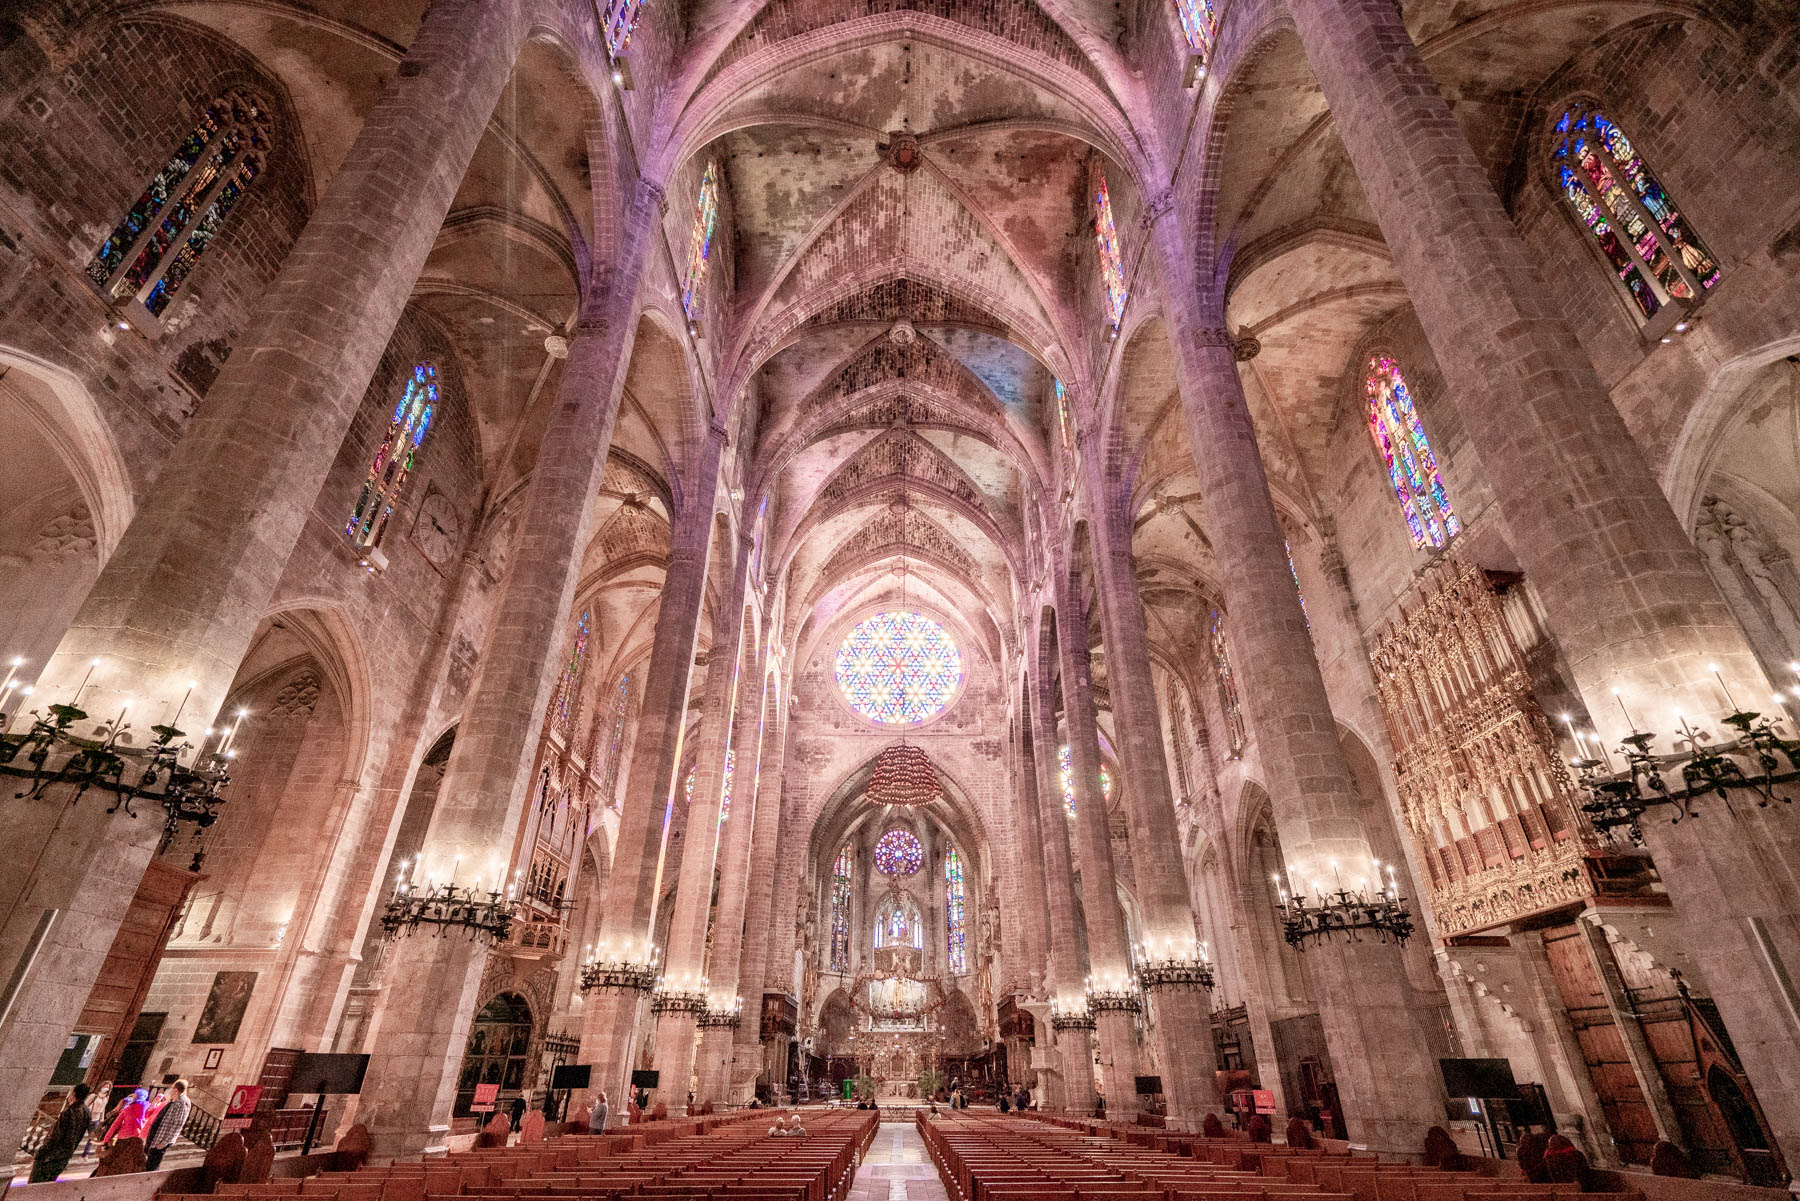 Cathedral of Palma inside
La Seu Palma interior